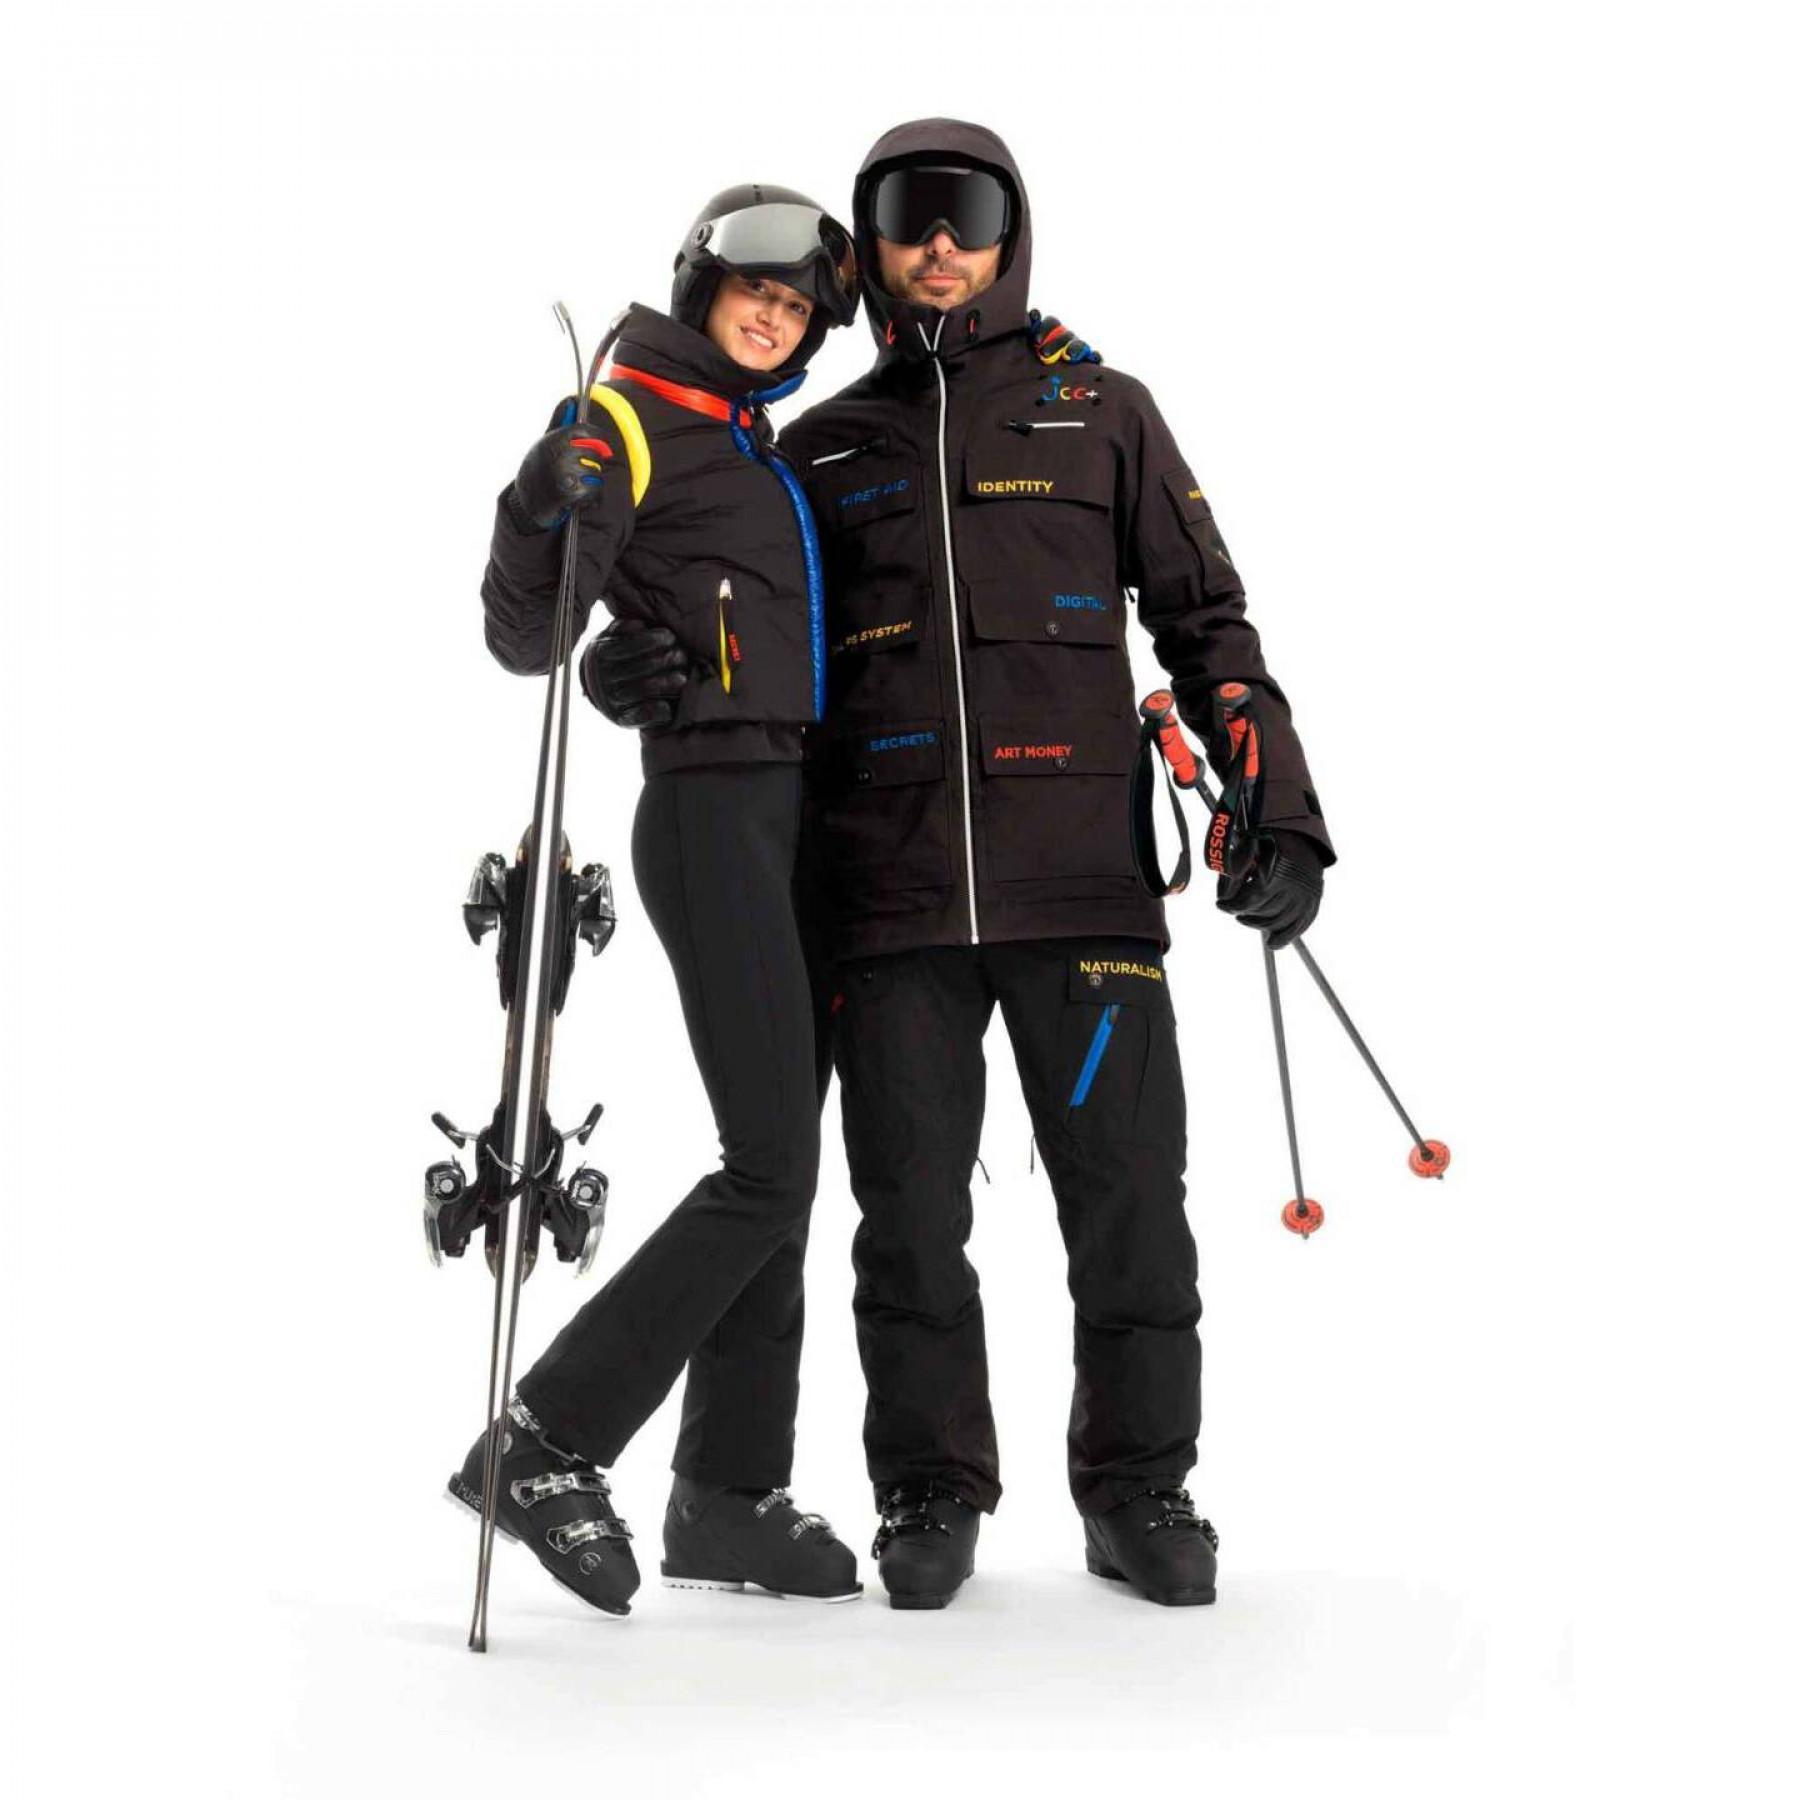 Pantalones de esquí Rossignol Airski PT